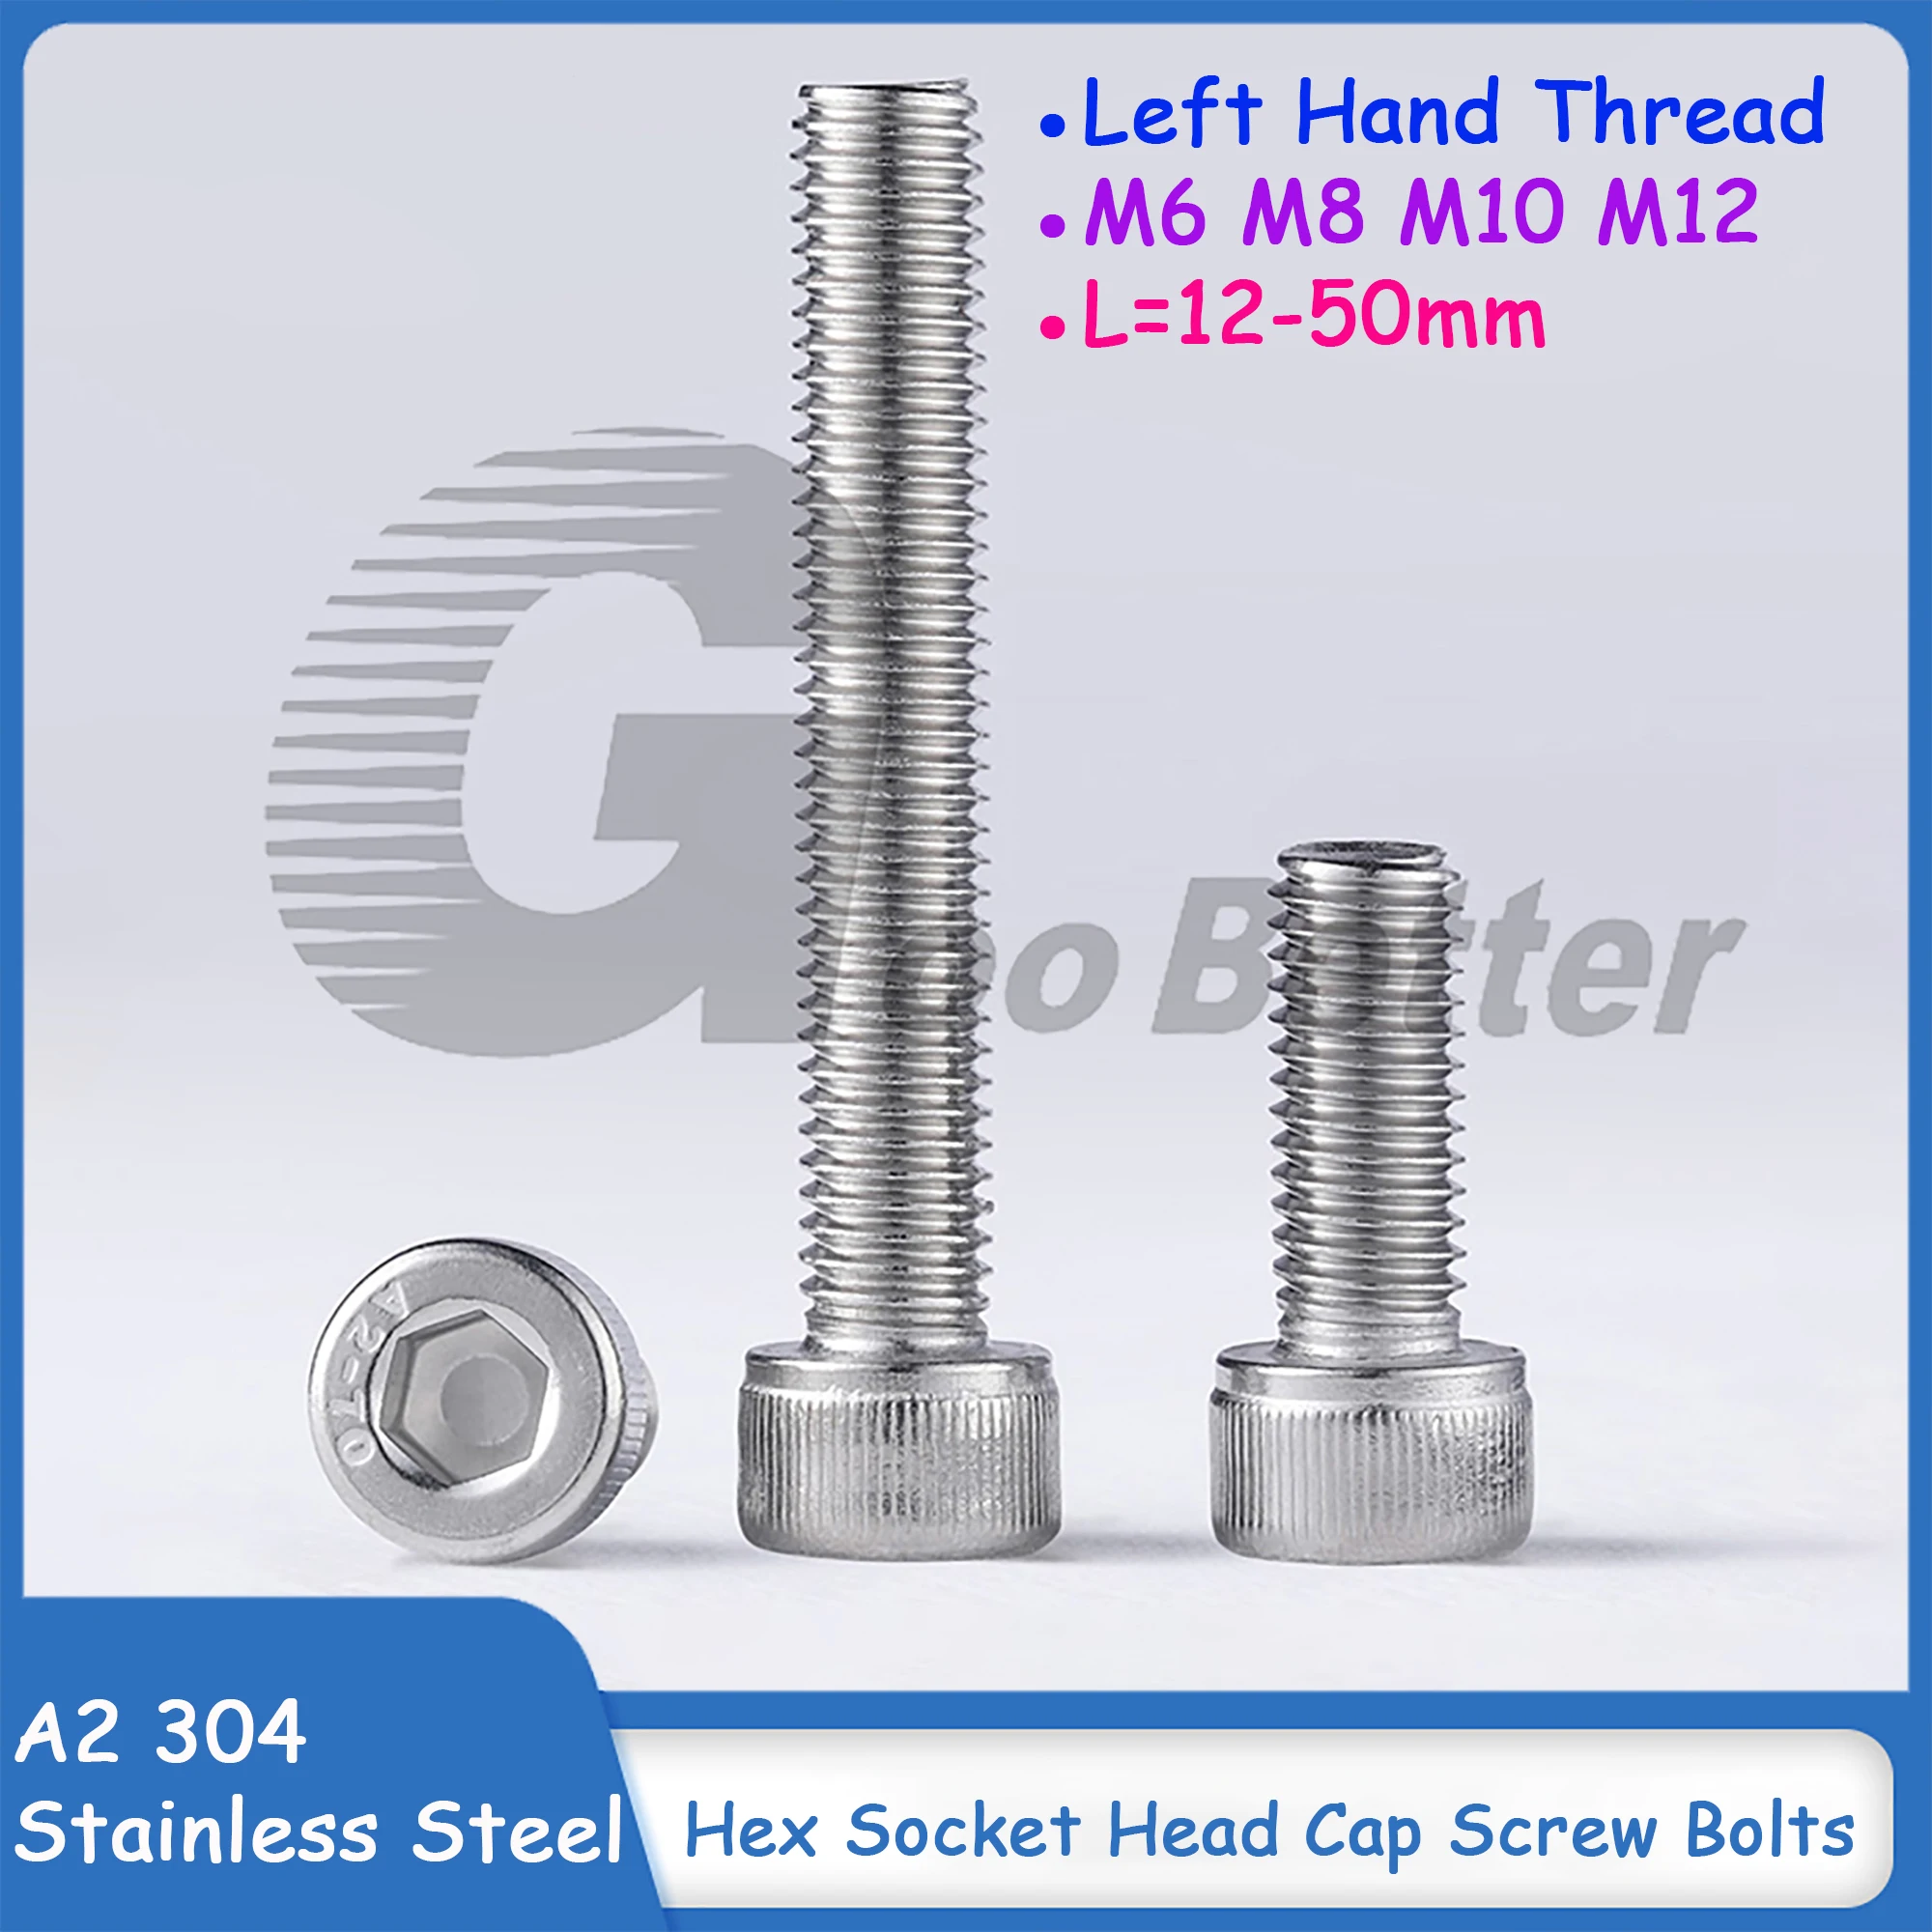 

A2 304 Stainless Steel Left Hand Thread Hex Socket Head Cap Screw Bolts Cylinder Head Allen Reverse Screws M6 M8 M10 M12